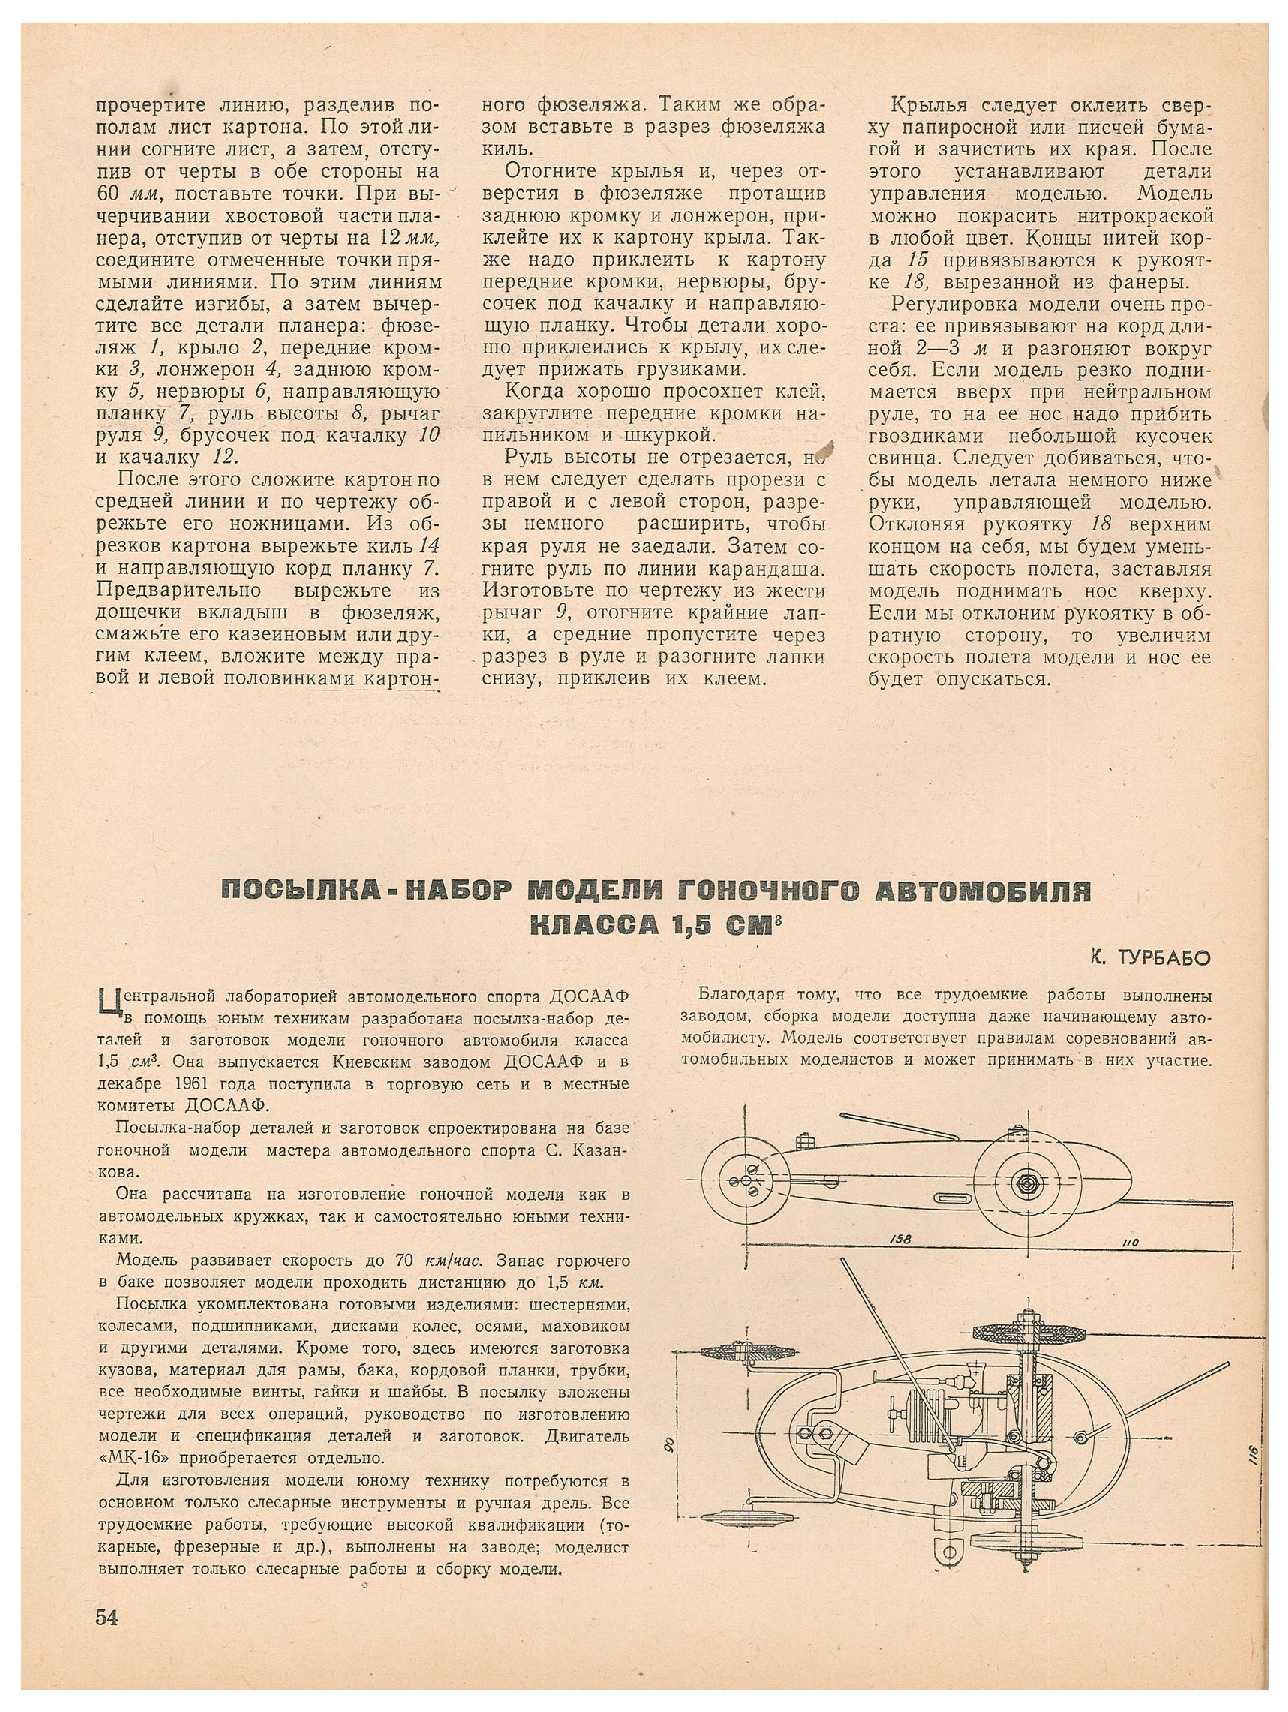 ЮМК 3, 1962, 54 c.